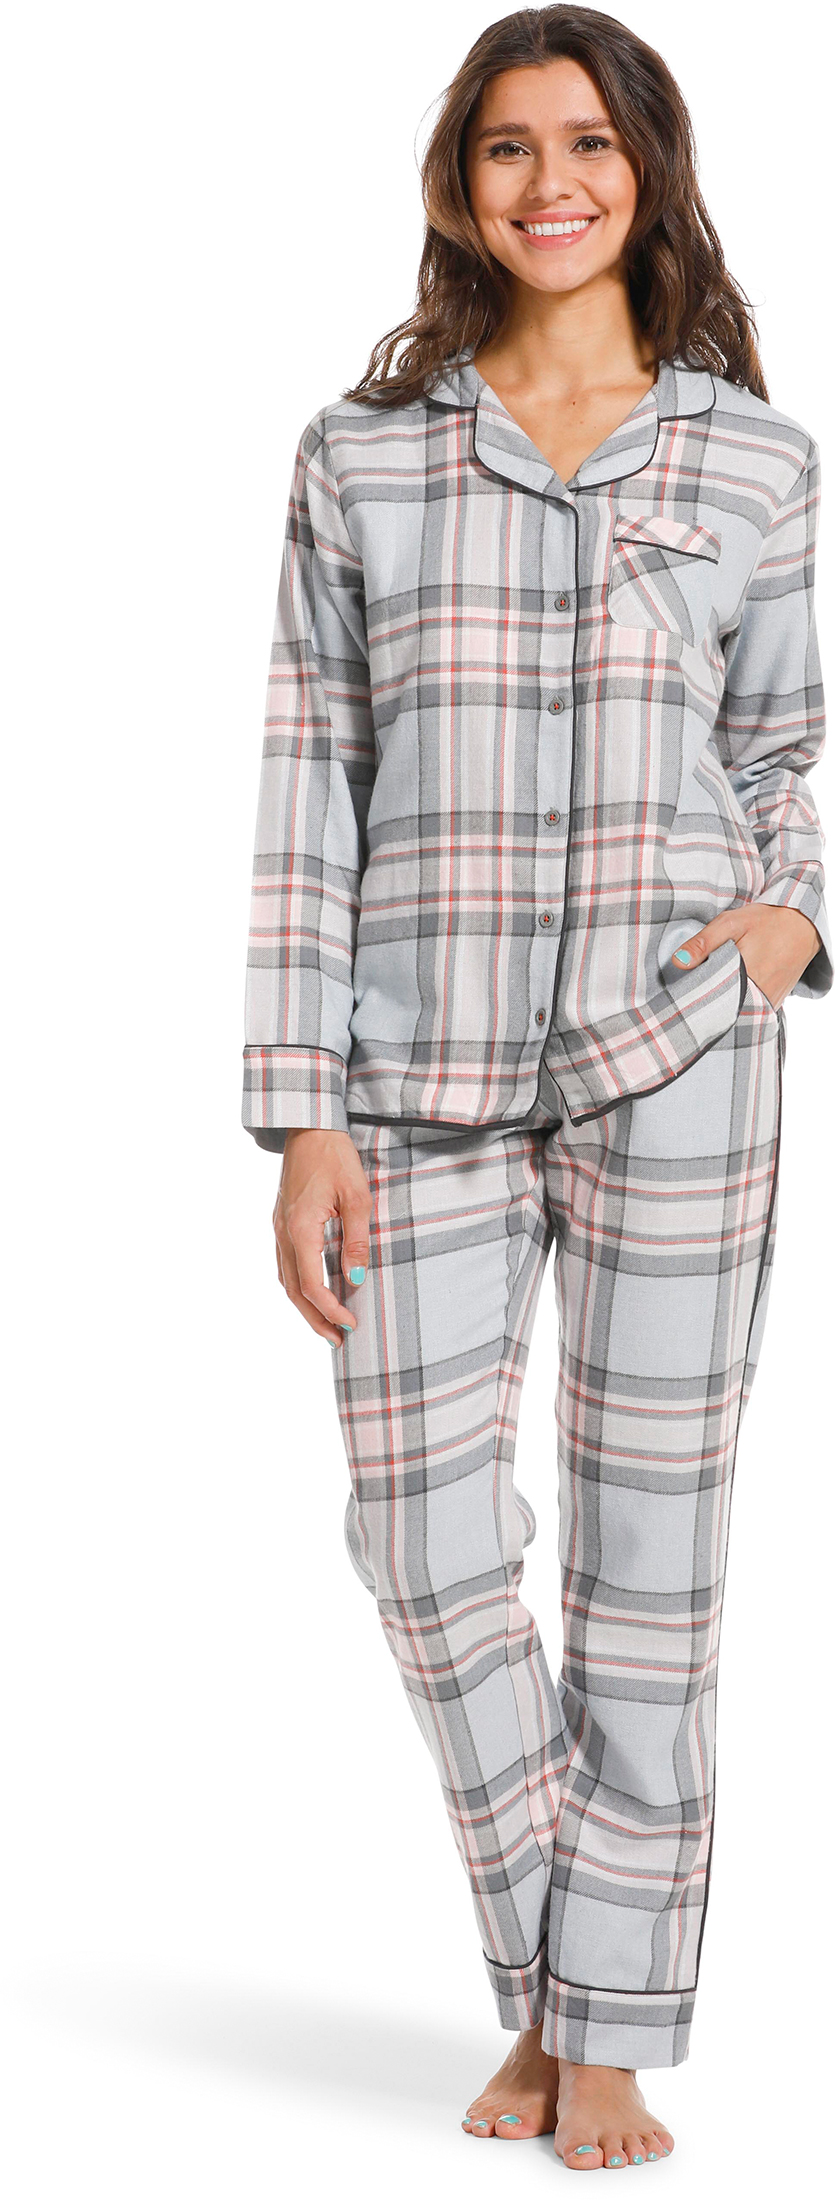 Rebelle dames pyjama flanel 21222-458-6 - Beige - 42